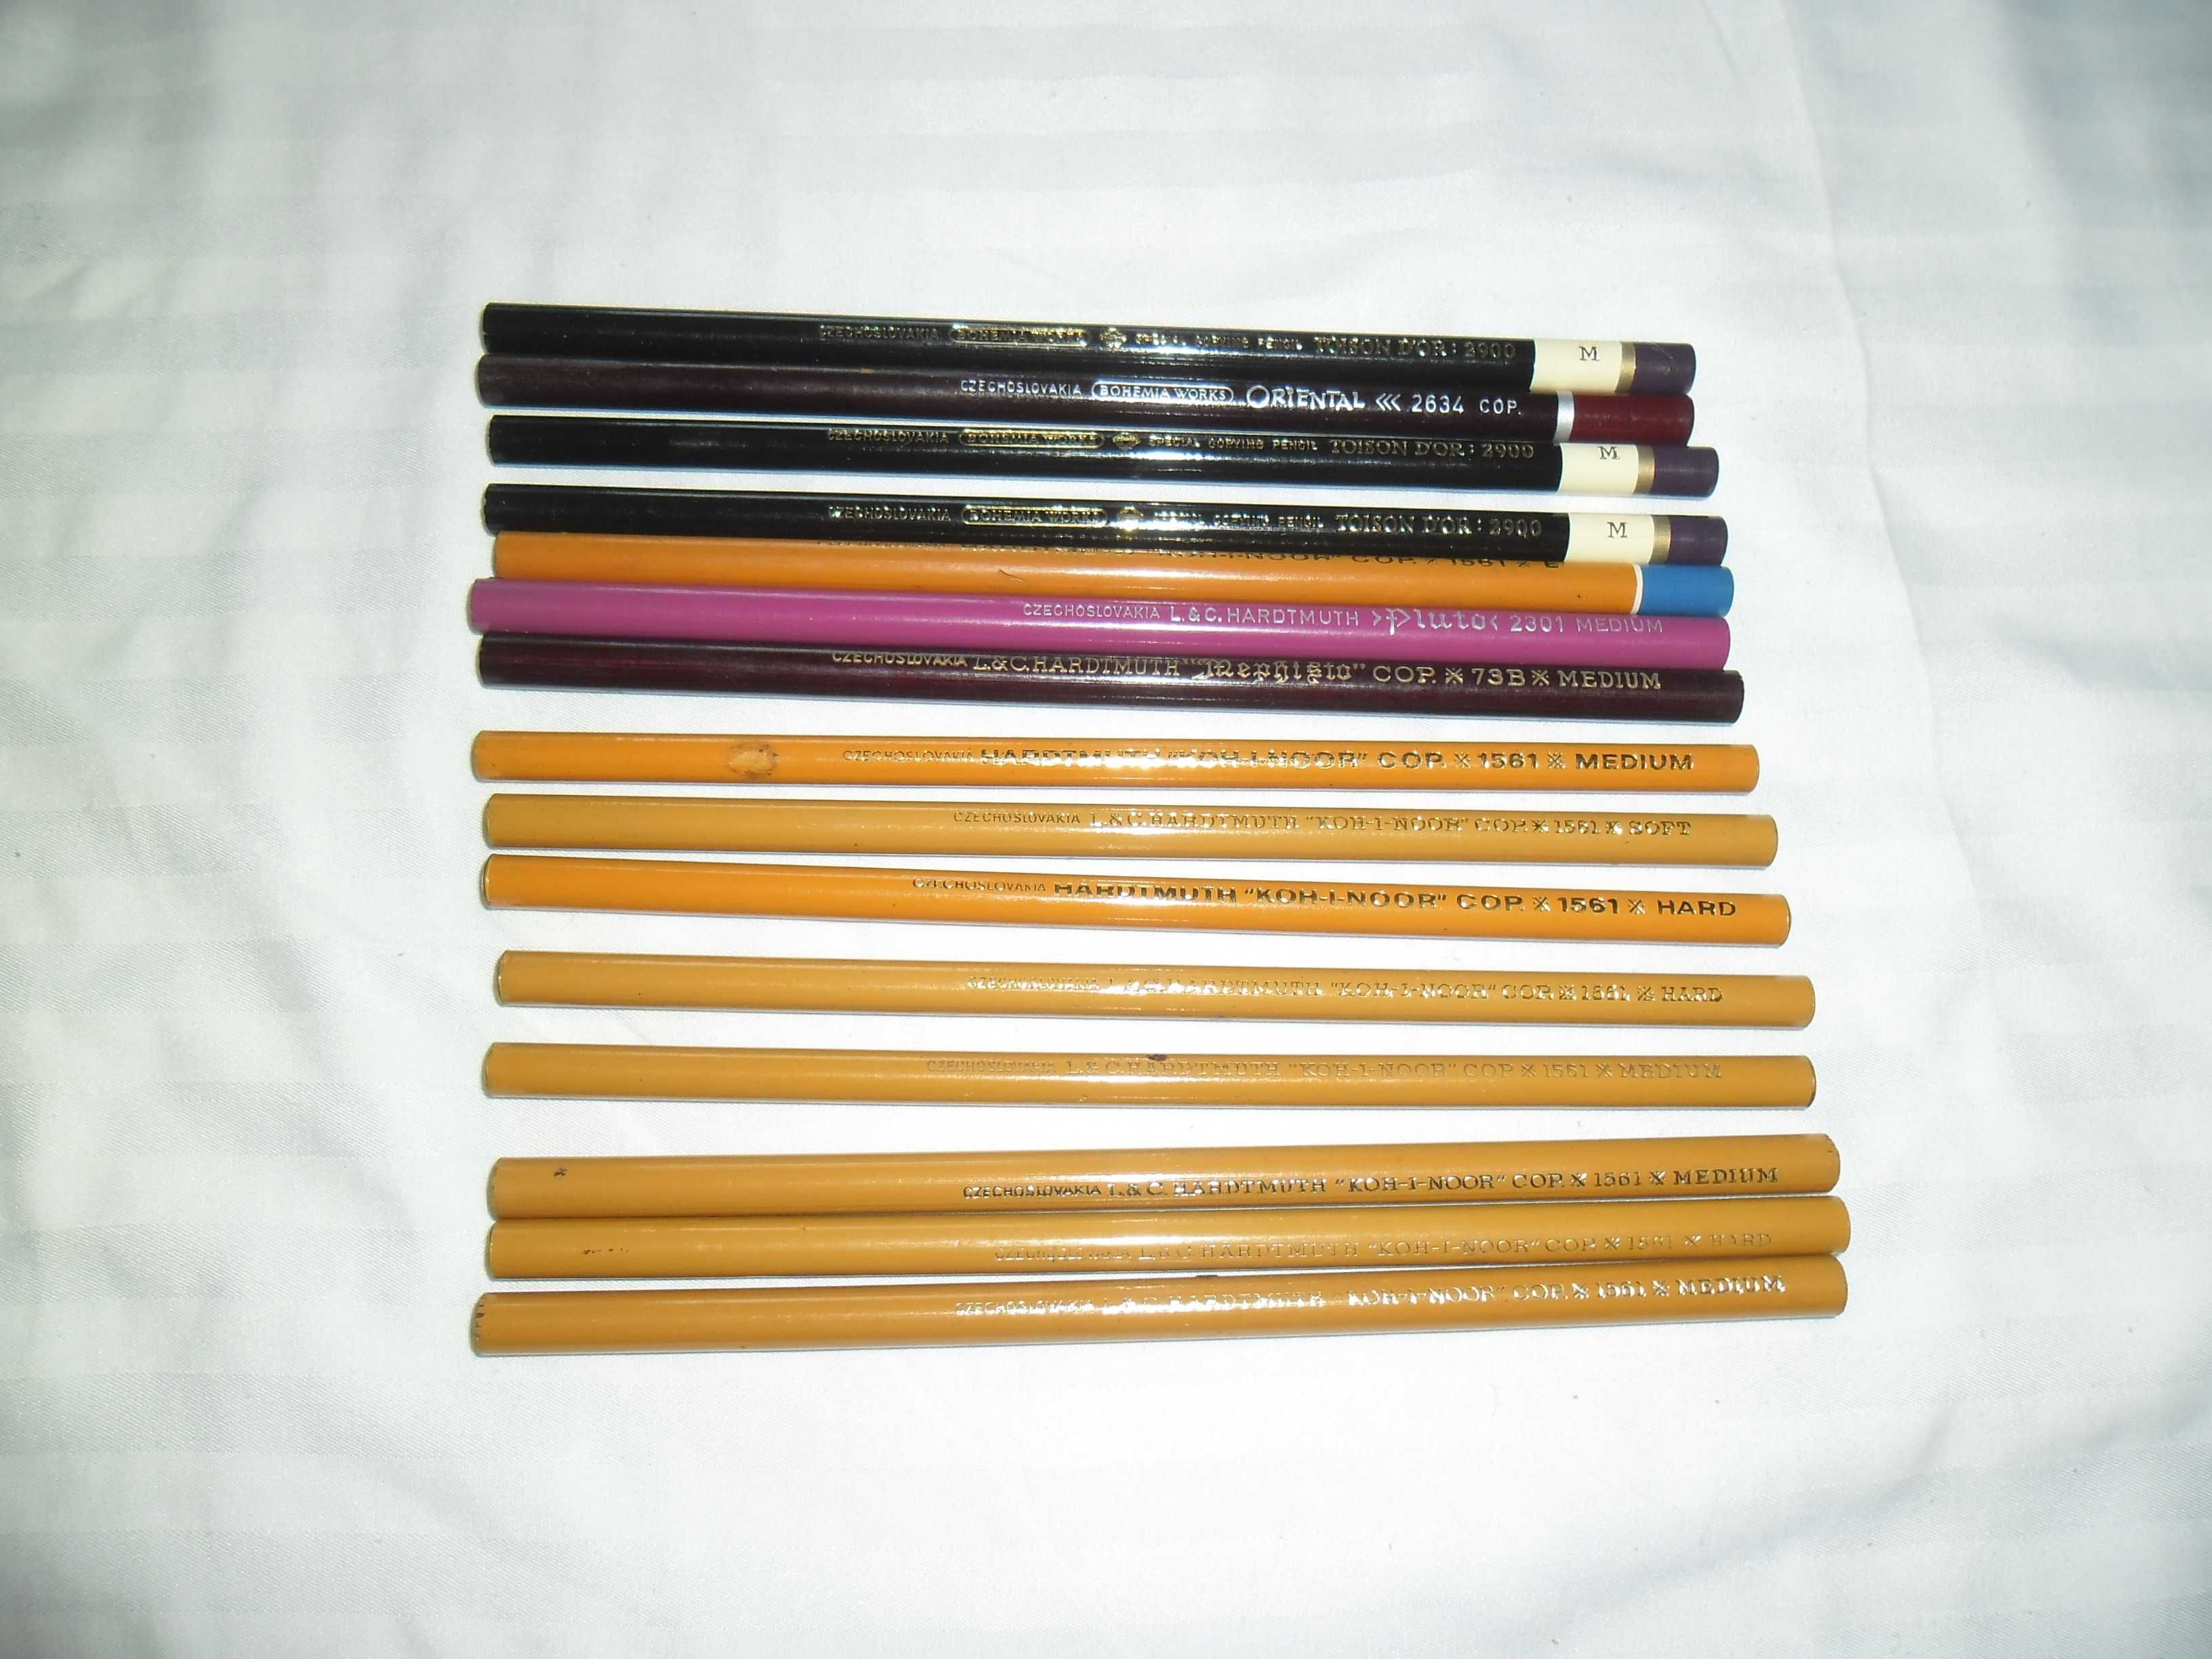 Creioane Chimice anii 80 Czechoslovakia Originale noi